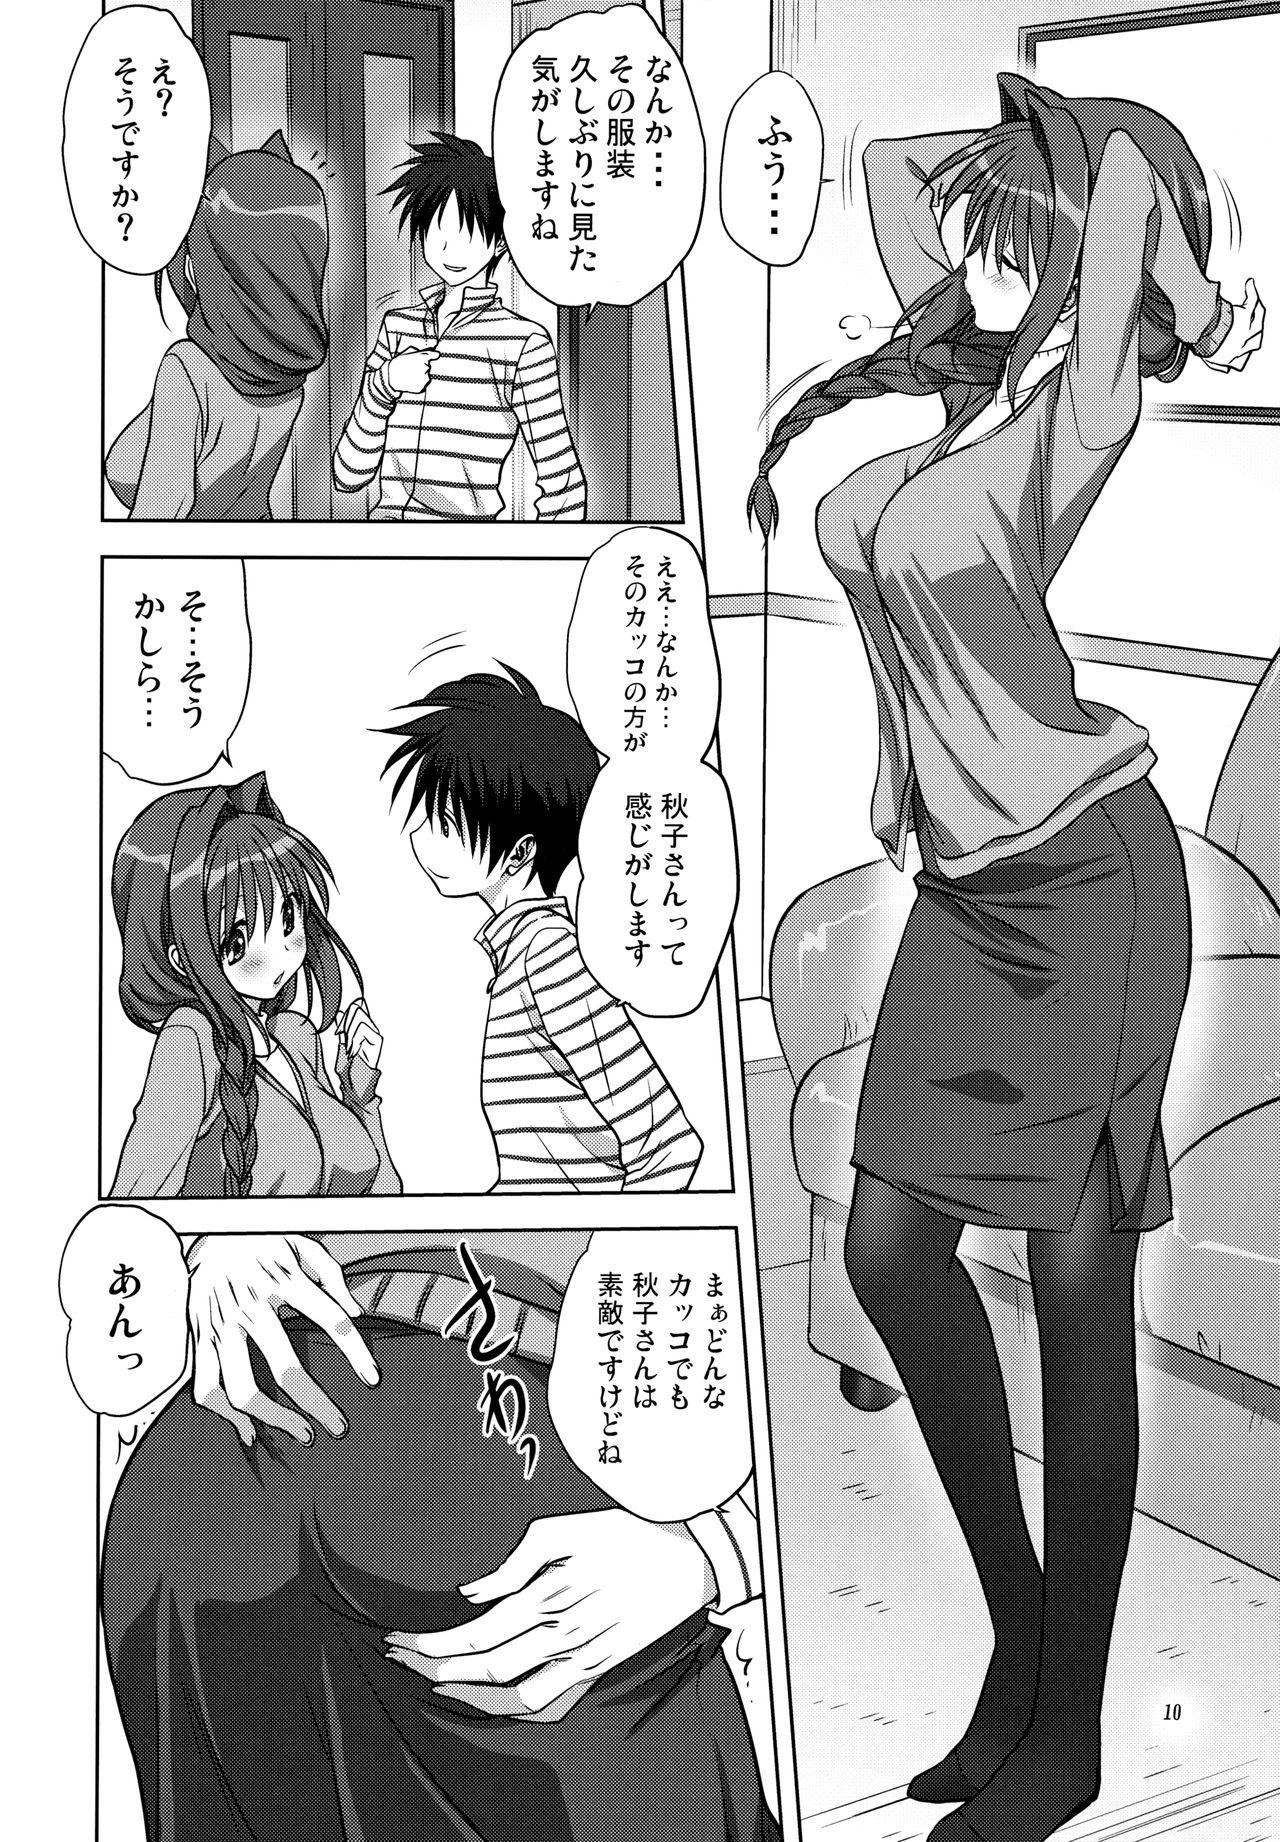 Police Akiko-san to Issho 13 - Kanon Smoking - Page 9